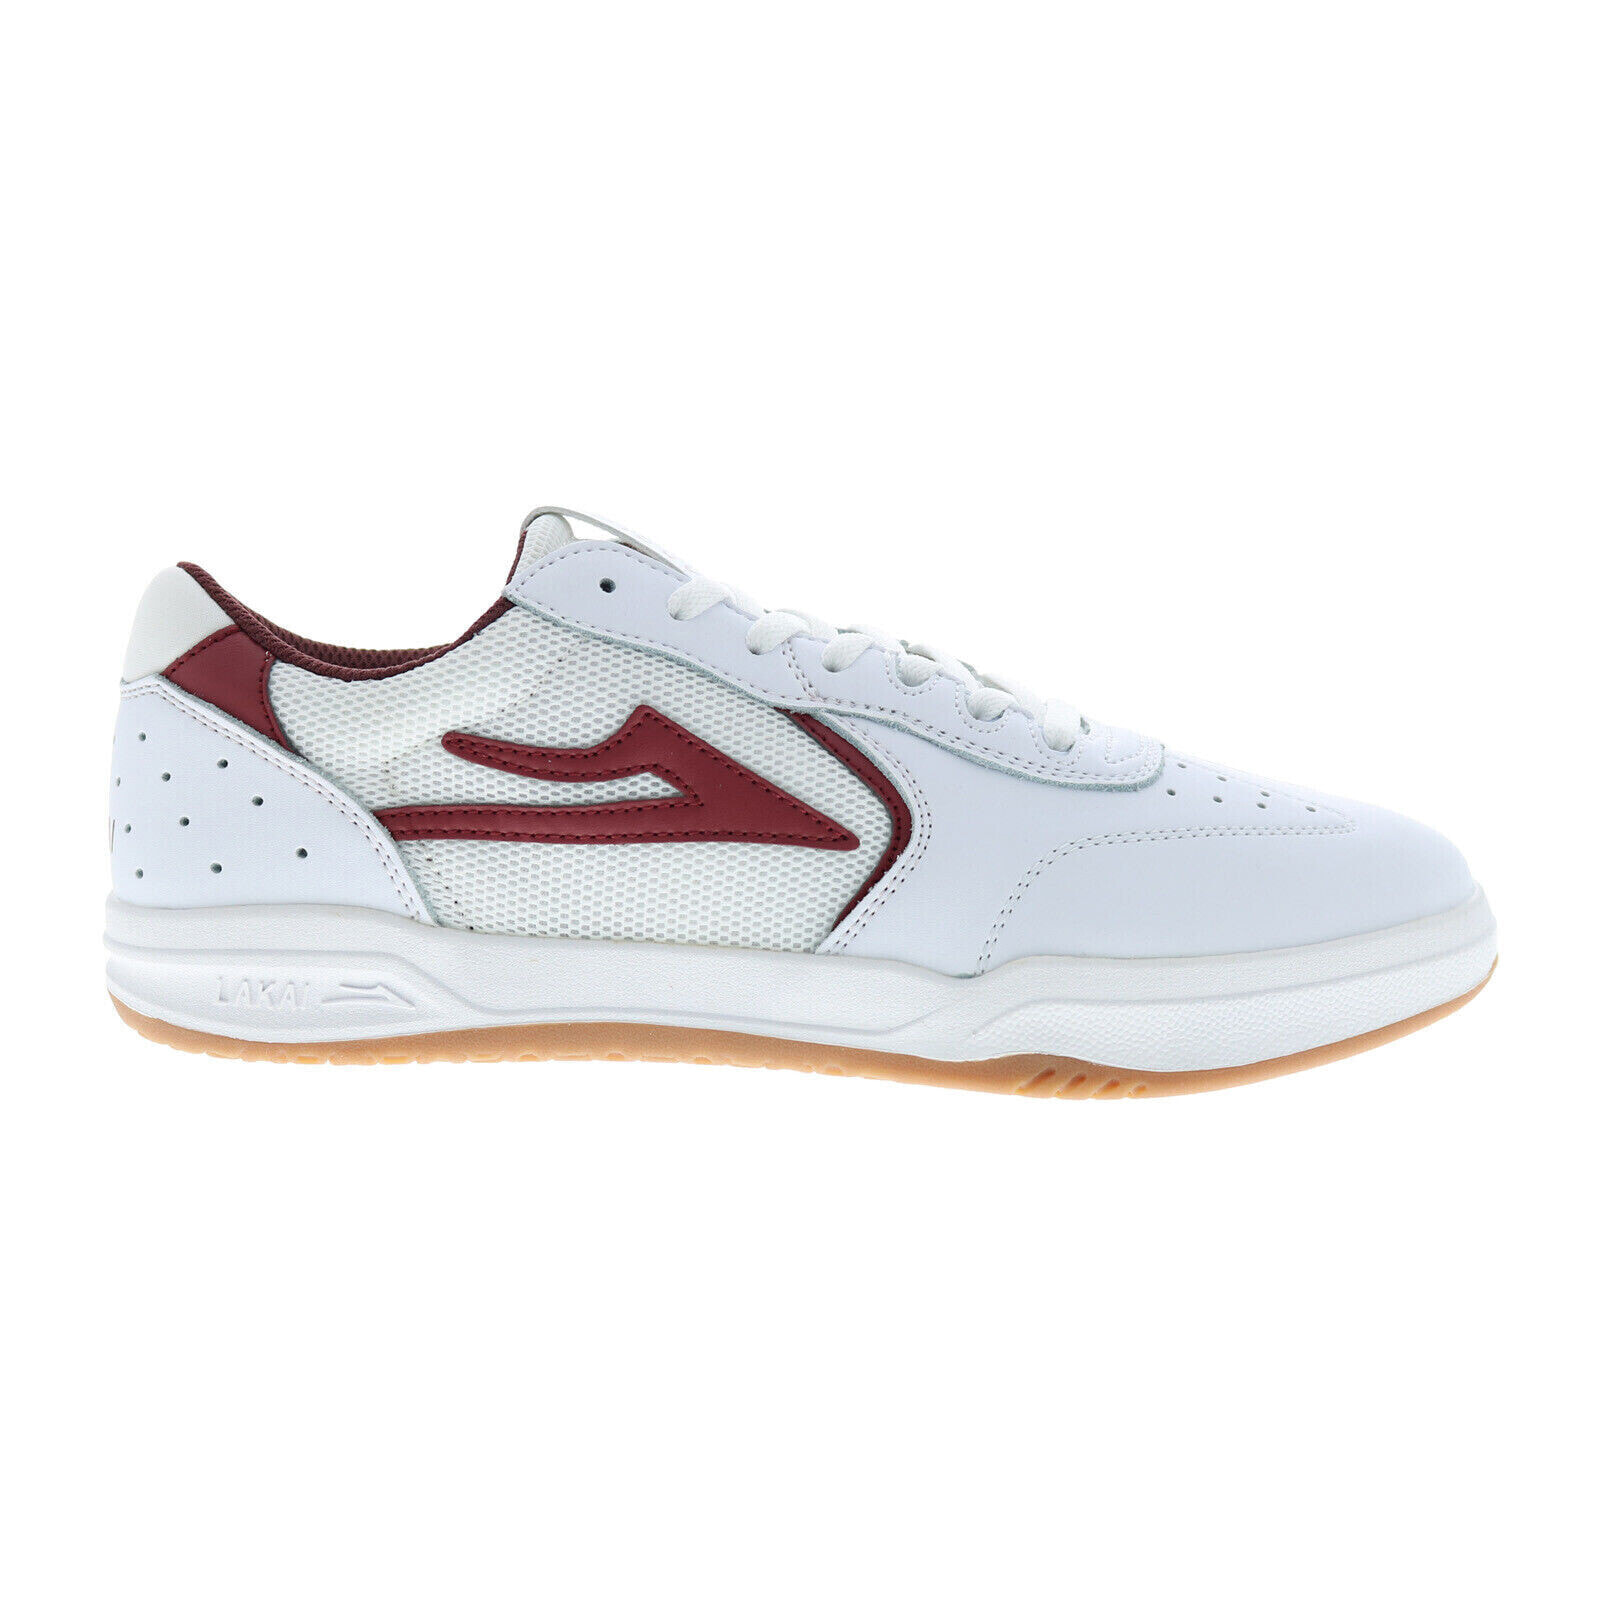 Lakai Atlantic MS1230082B00 Mens White Leather Skate Inspired Sneakers Shoes 8.5